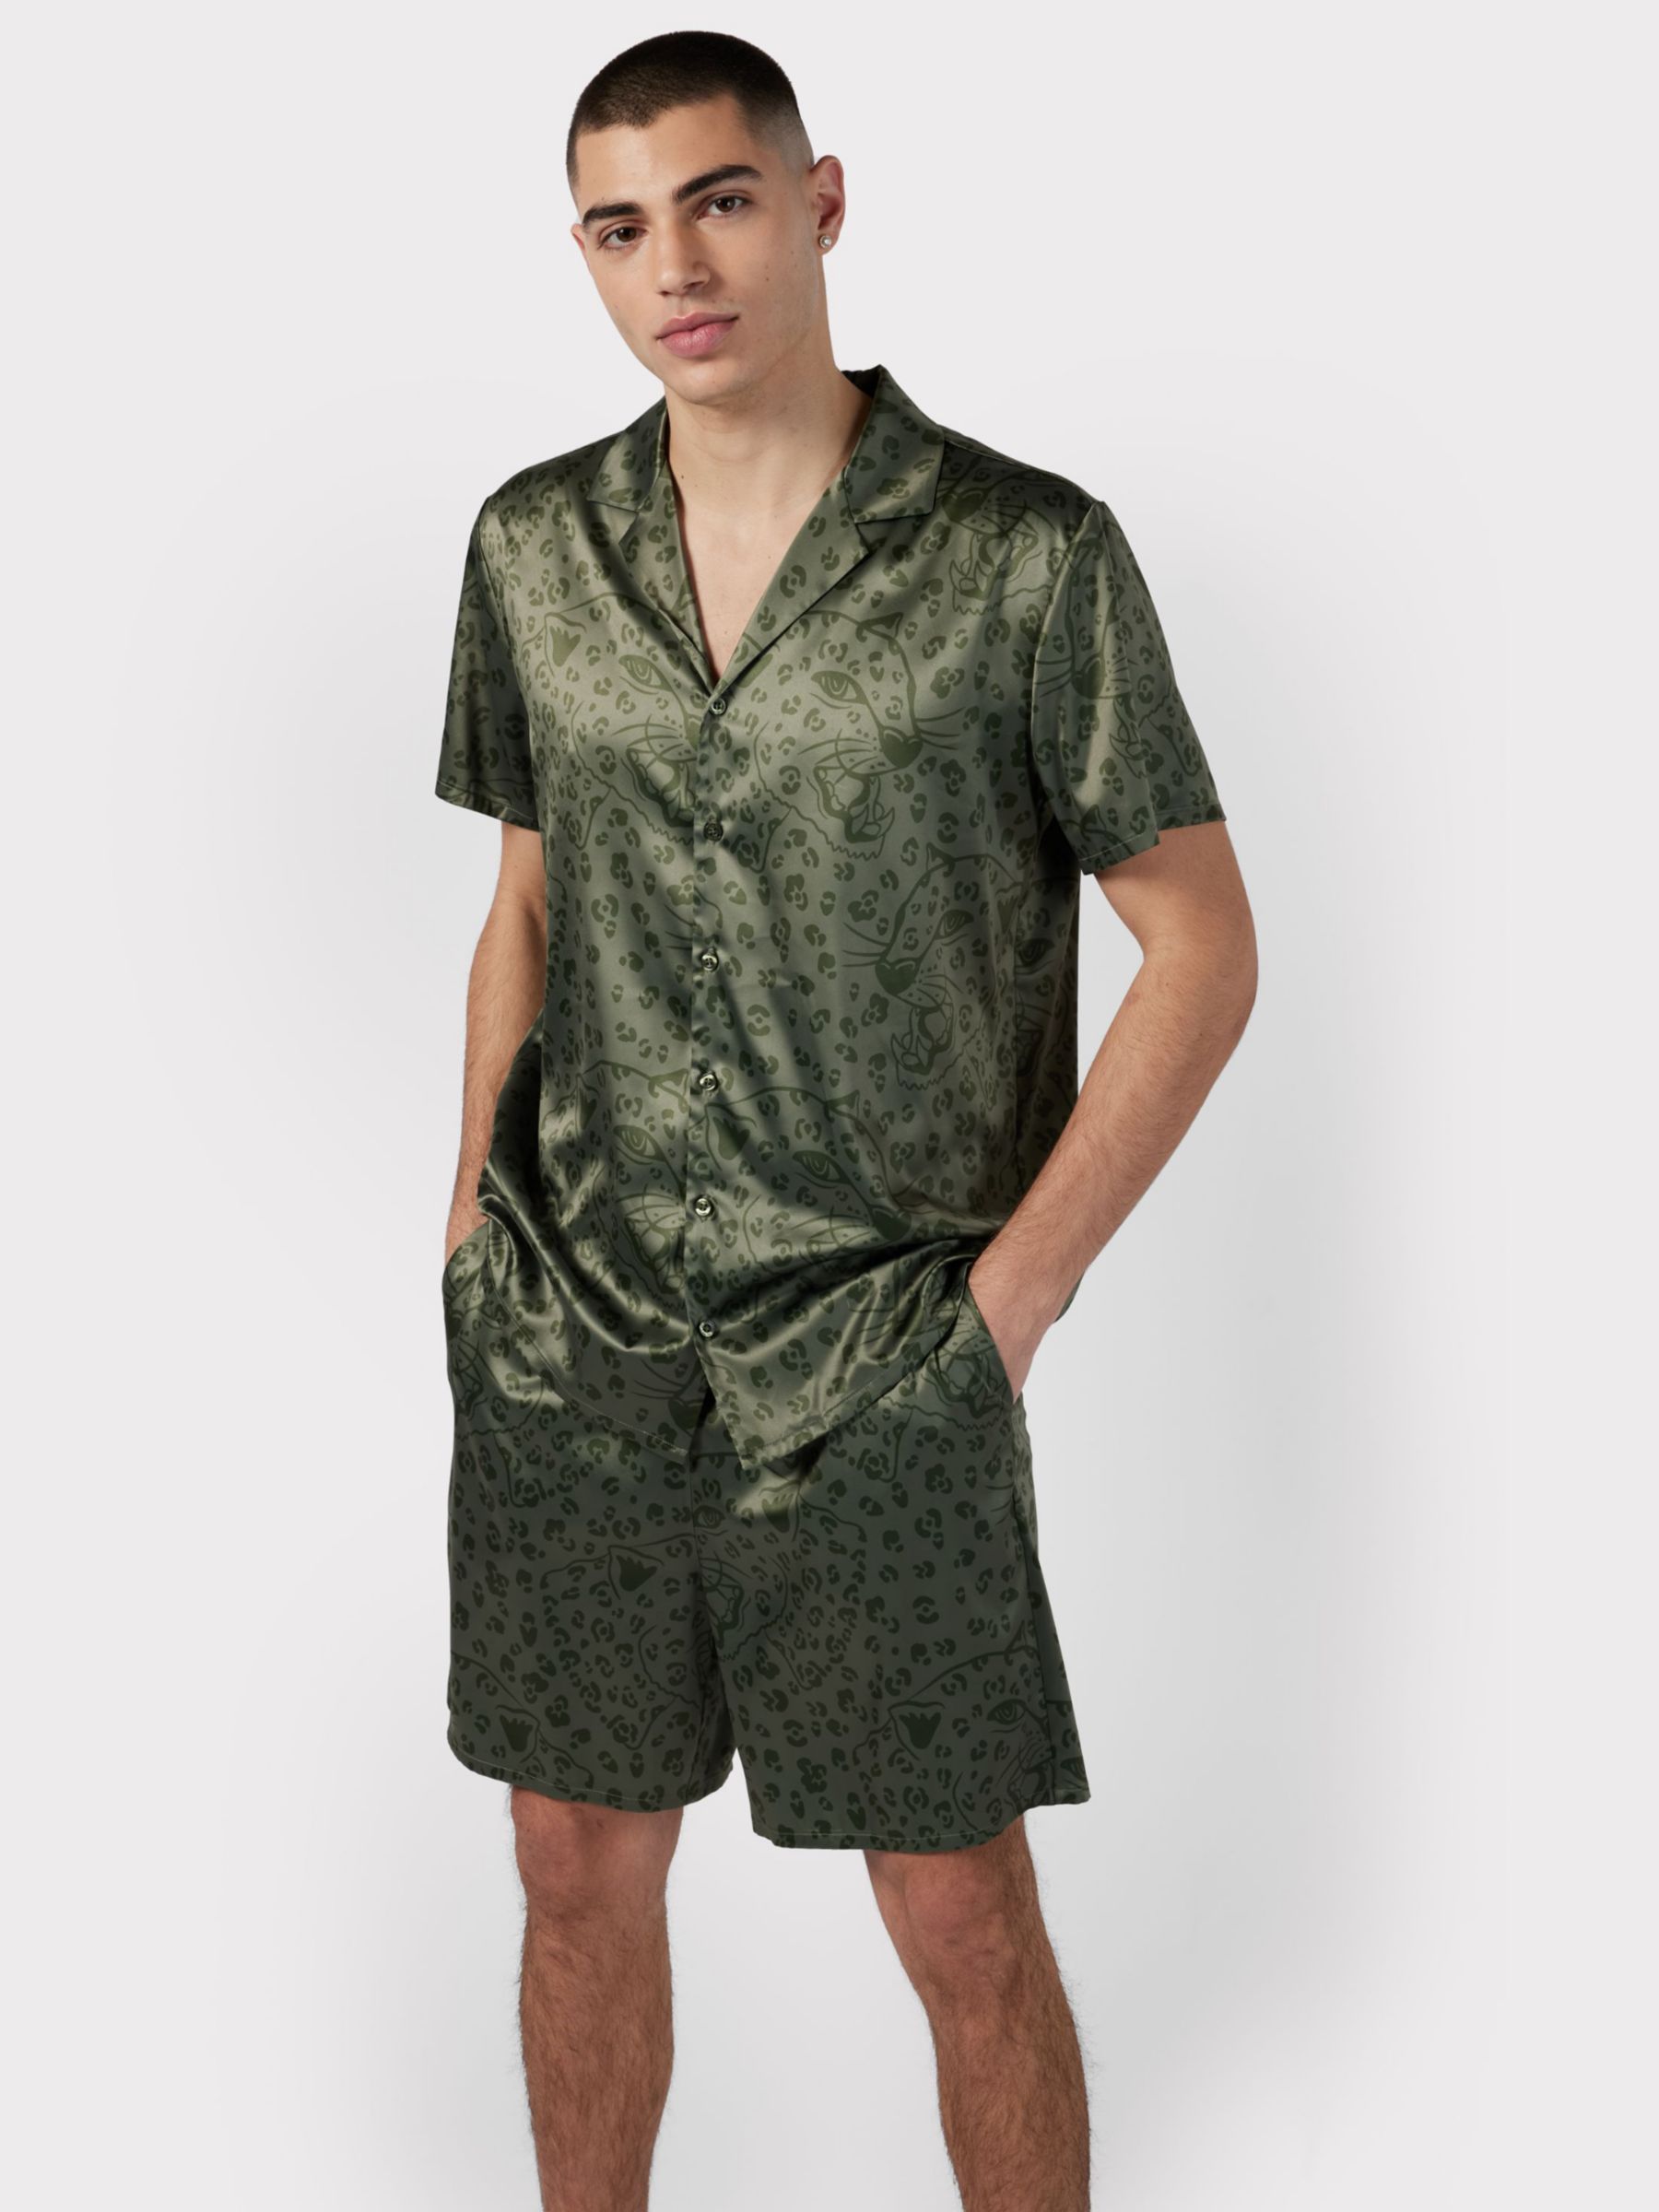 Chelsea Peers Satin Hidden Leopard Print Short Pyjama Set, Khaki, XL